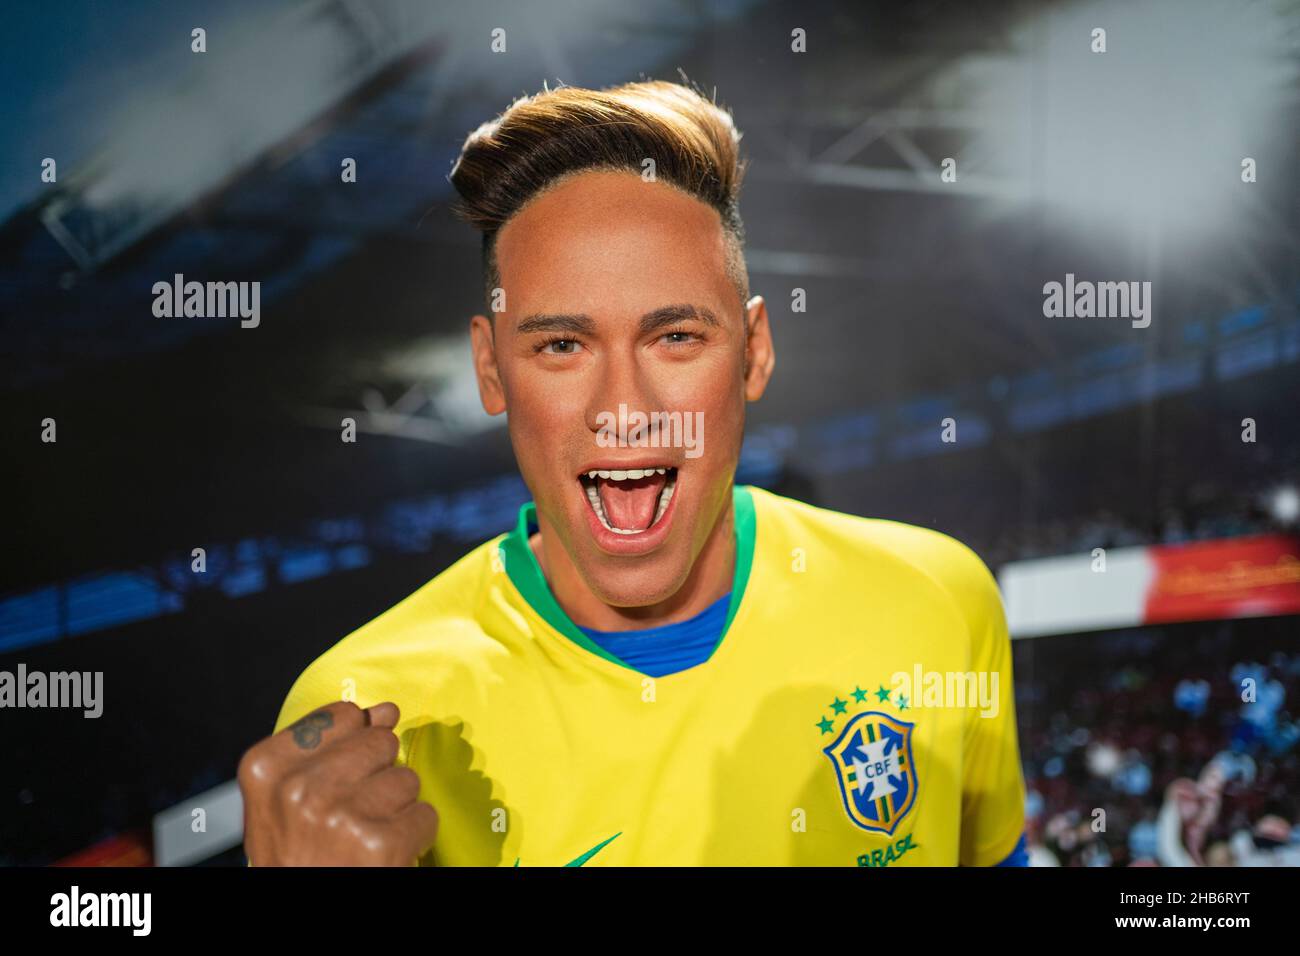 Neymar wax sculpture at Madame Tussauds Istanbul. Neymar is a Brazilian professional footballer. Stock Photo